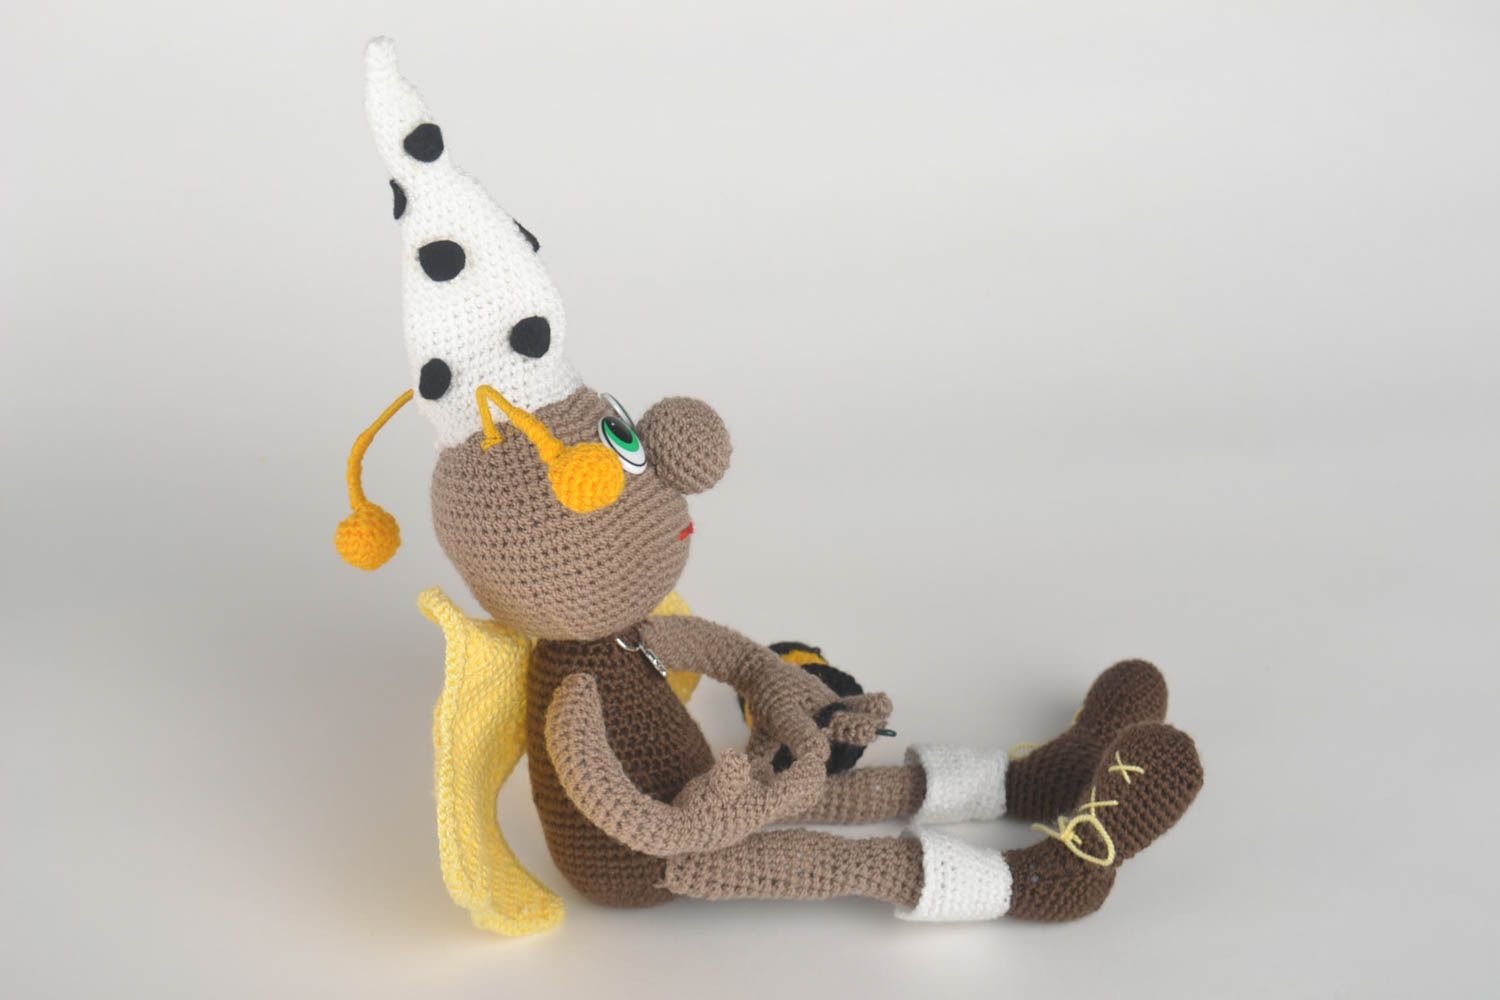 Beautiful handmade crochet soft toy stuffed toy birthday gift ideas photo 5